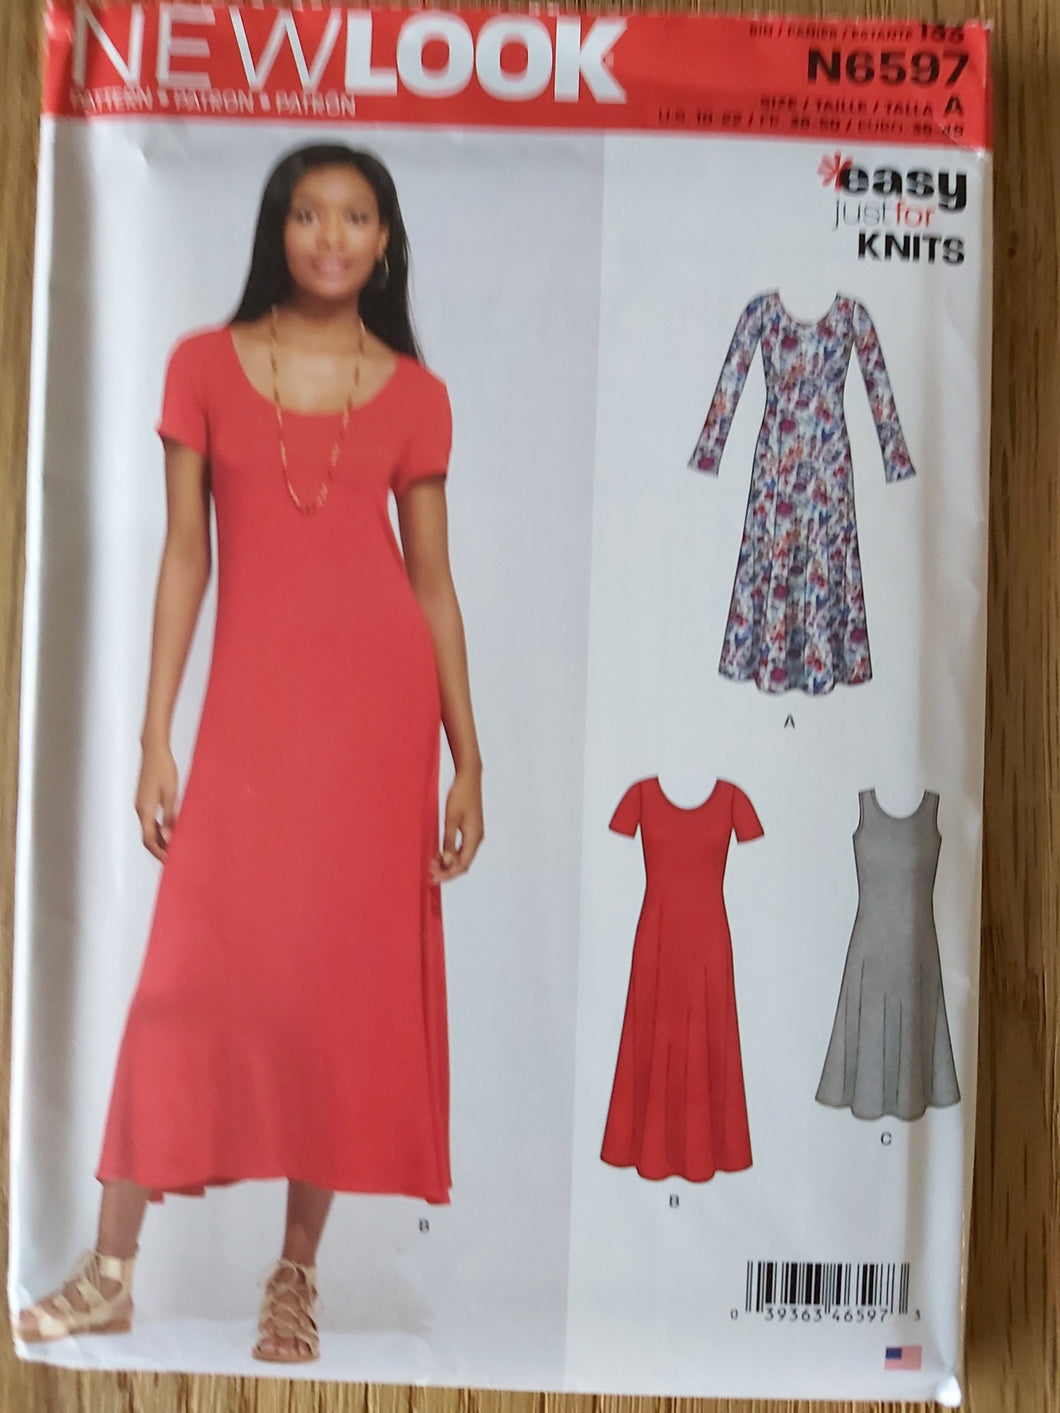 New Look N6597 Knit Dress- singlet dress, short or long sleeve